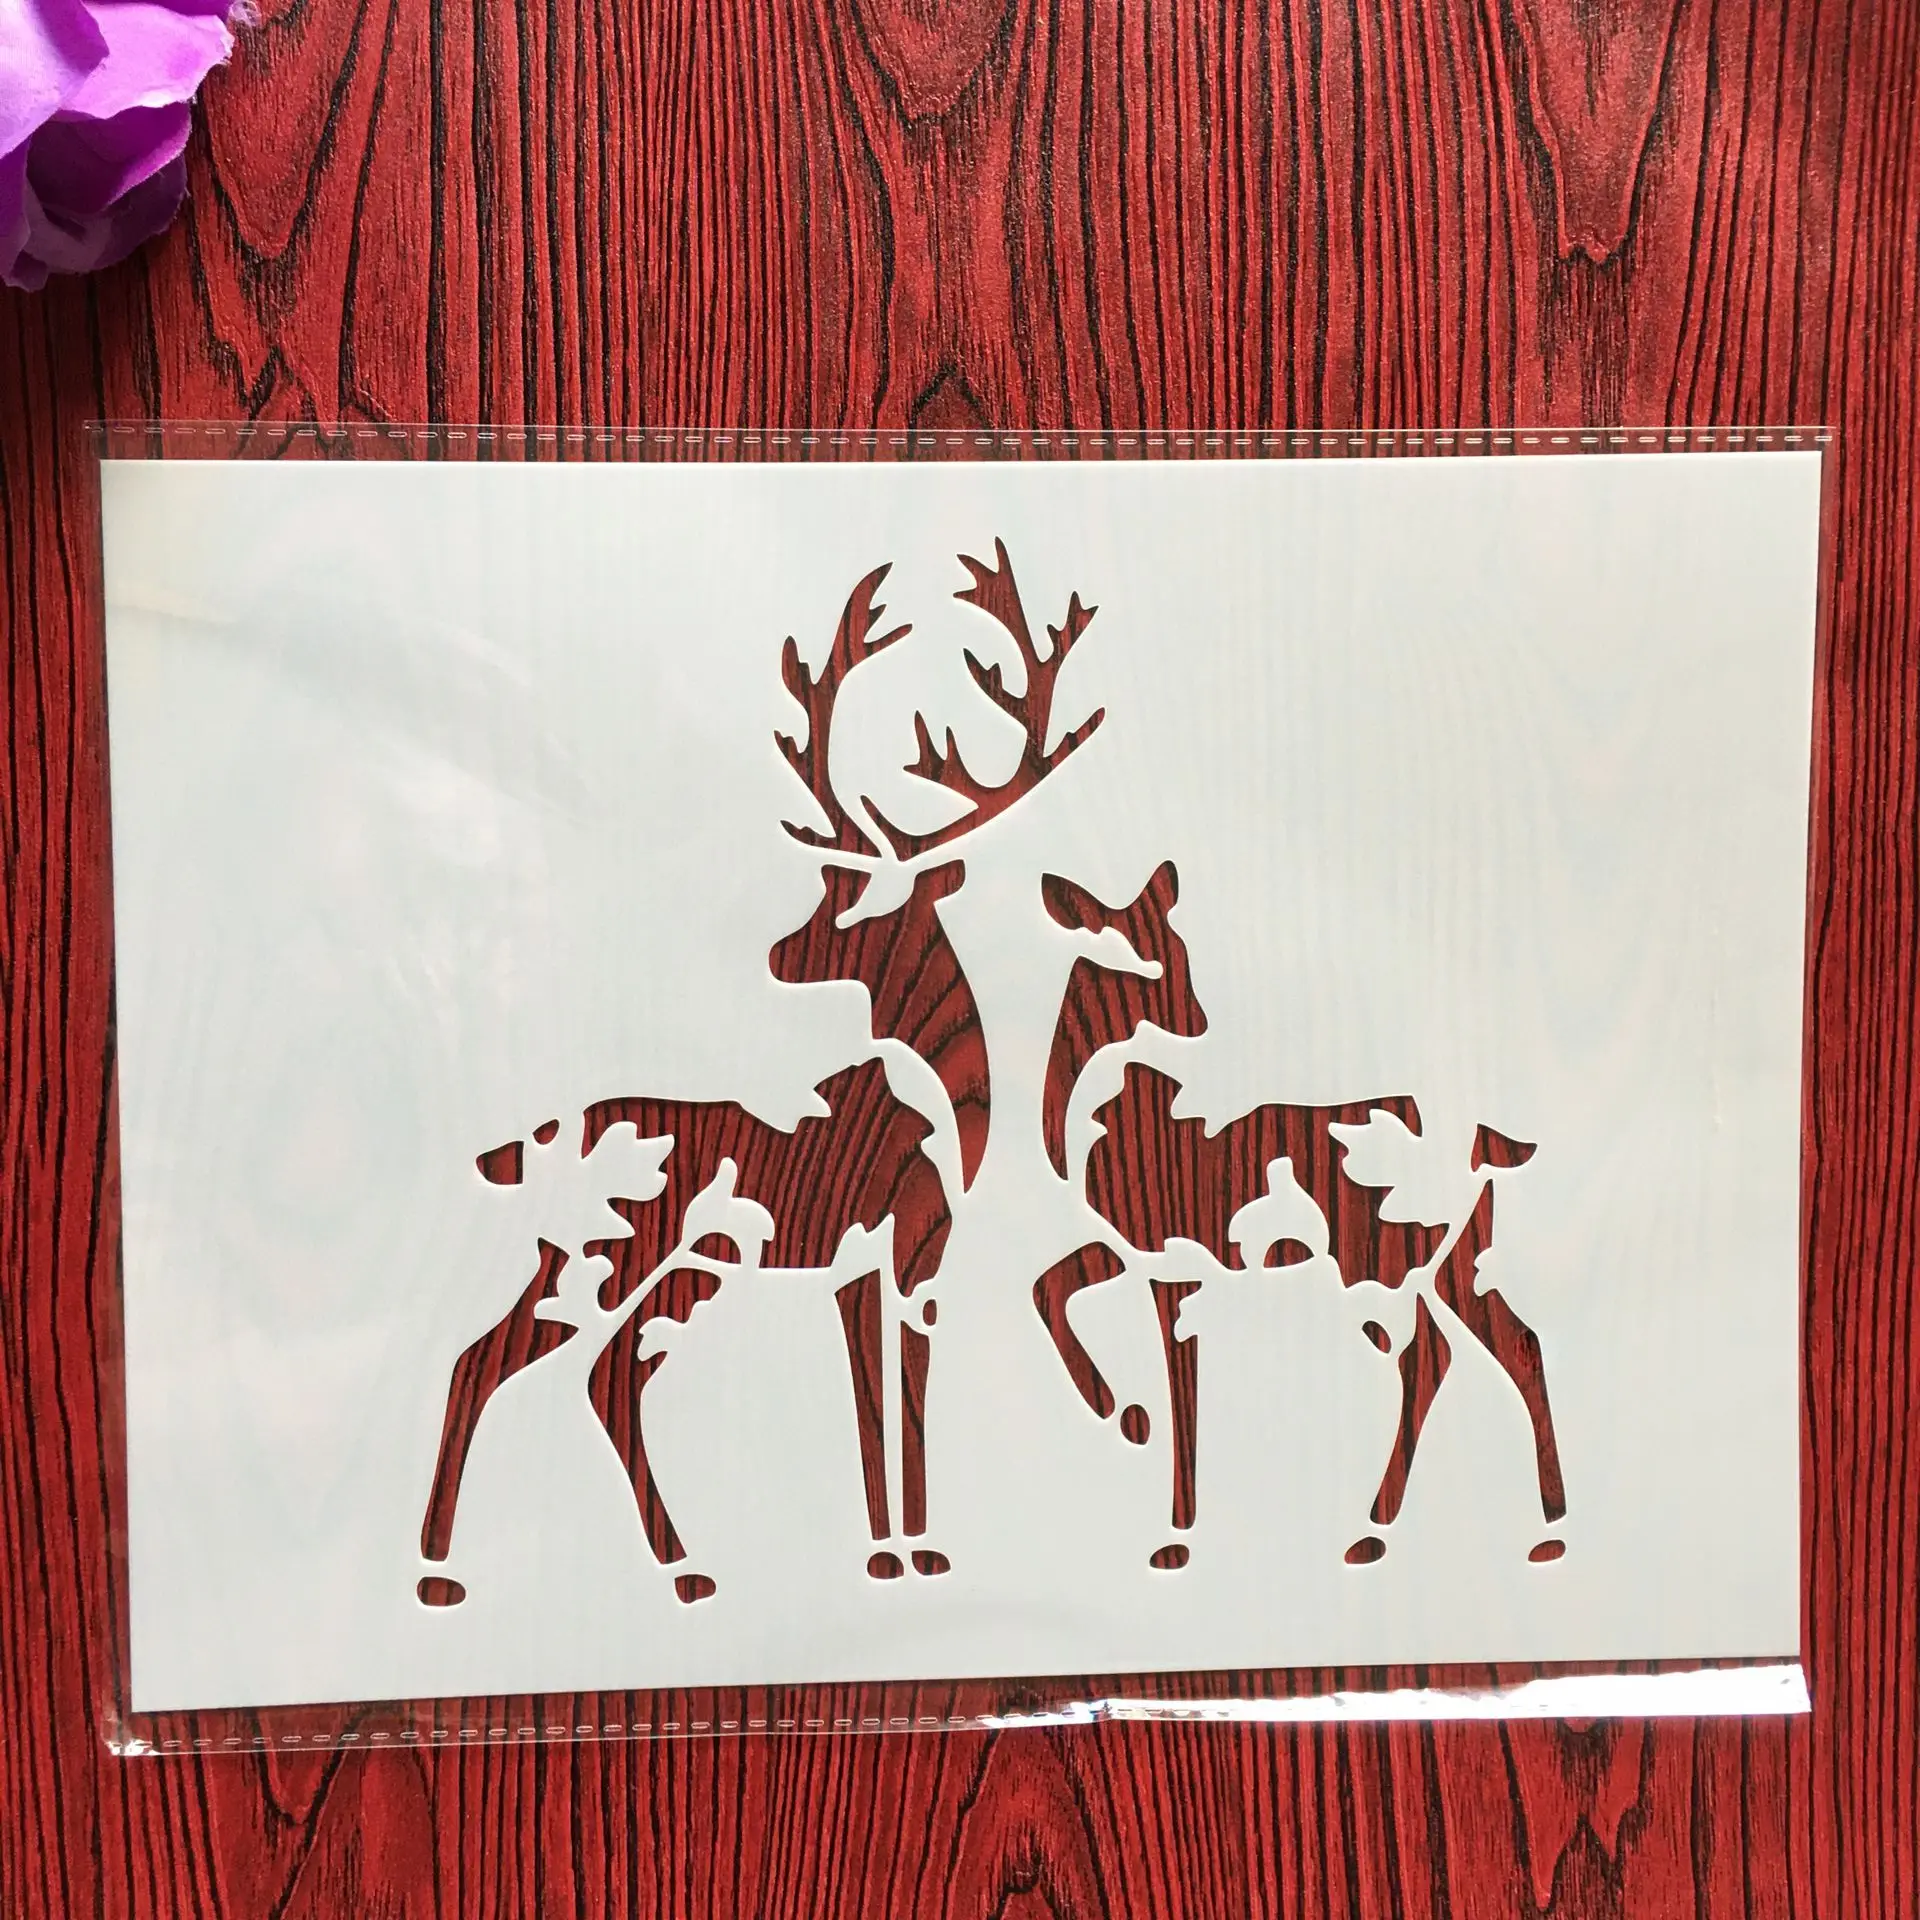 

A4 29 * 21cm Sika Deer DIY Stencils Wall Painting Scrapbook Coloring Embossing Album Decorative Paper Card Template